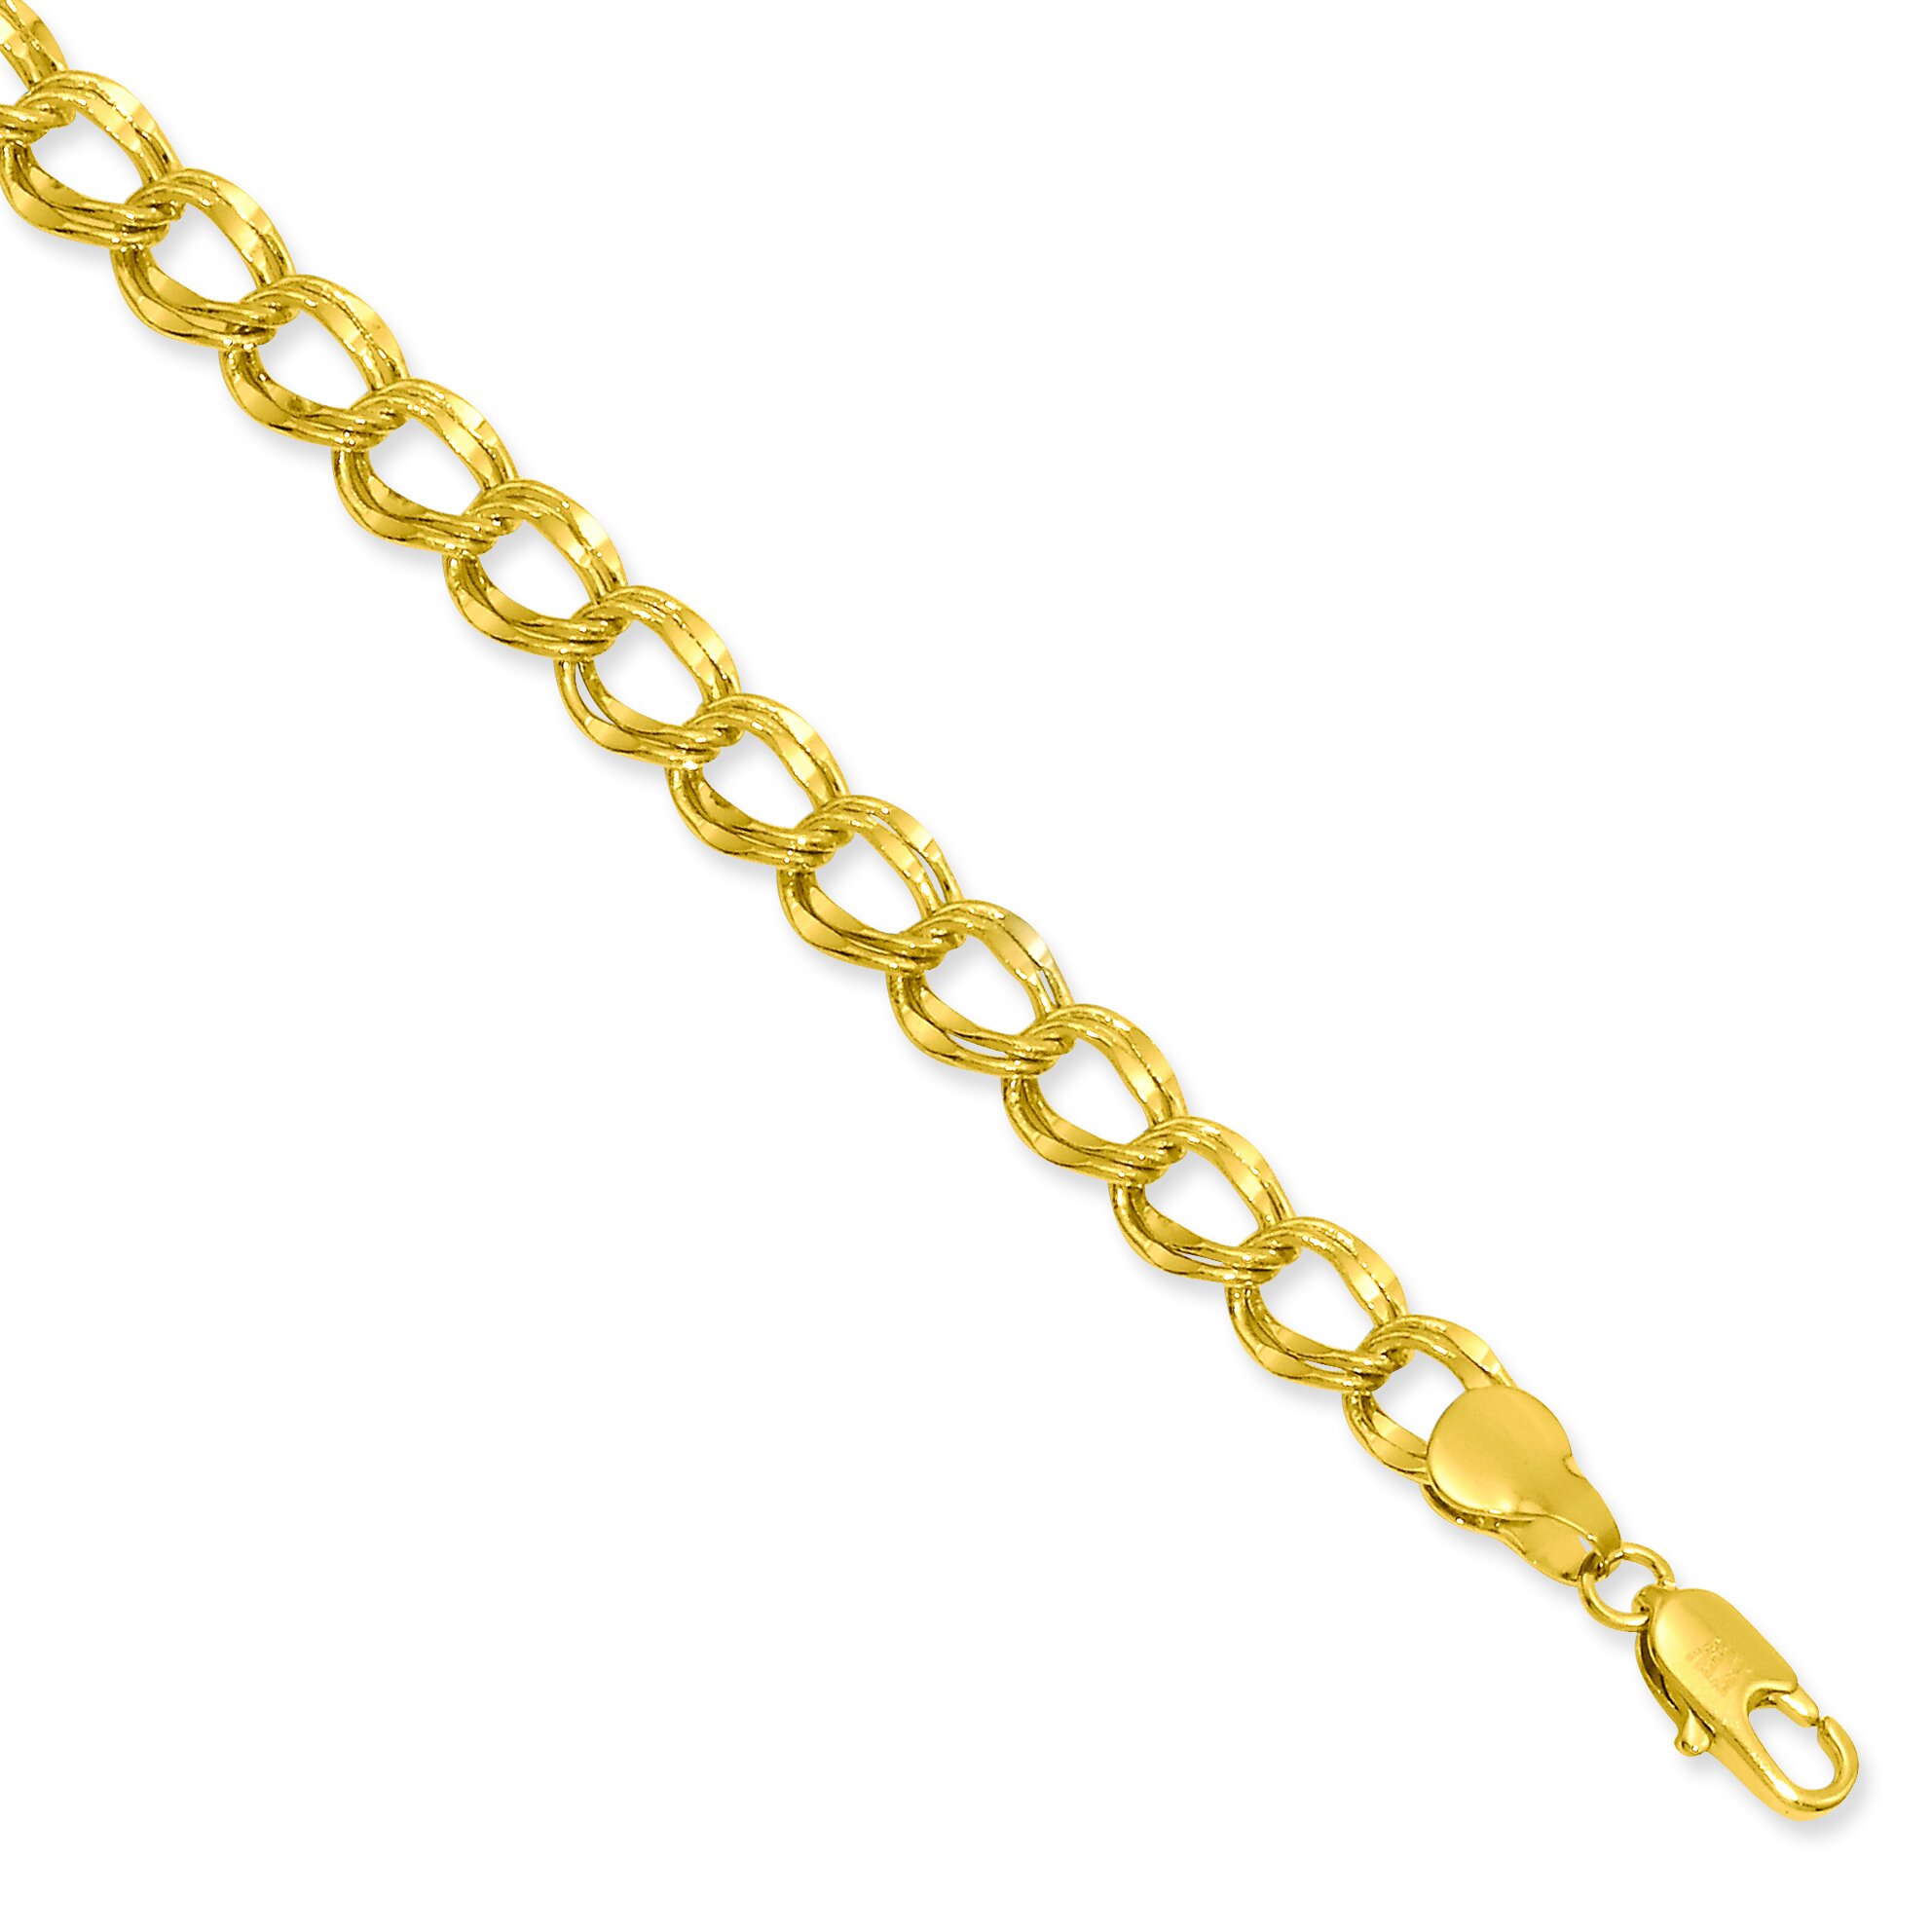 Findingking Gold Plated Double Link Bracelet 8.25"